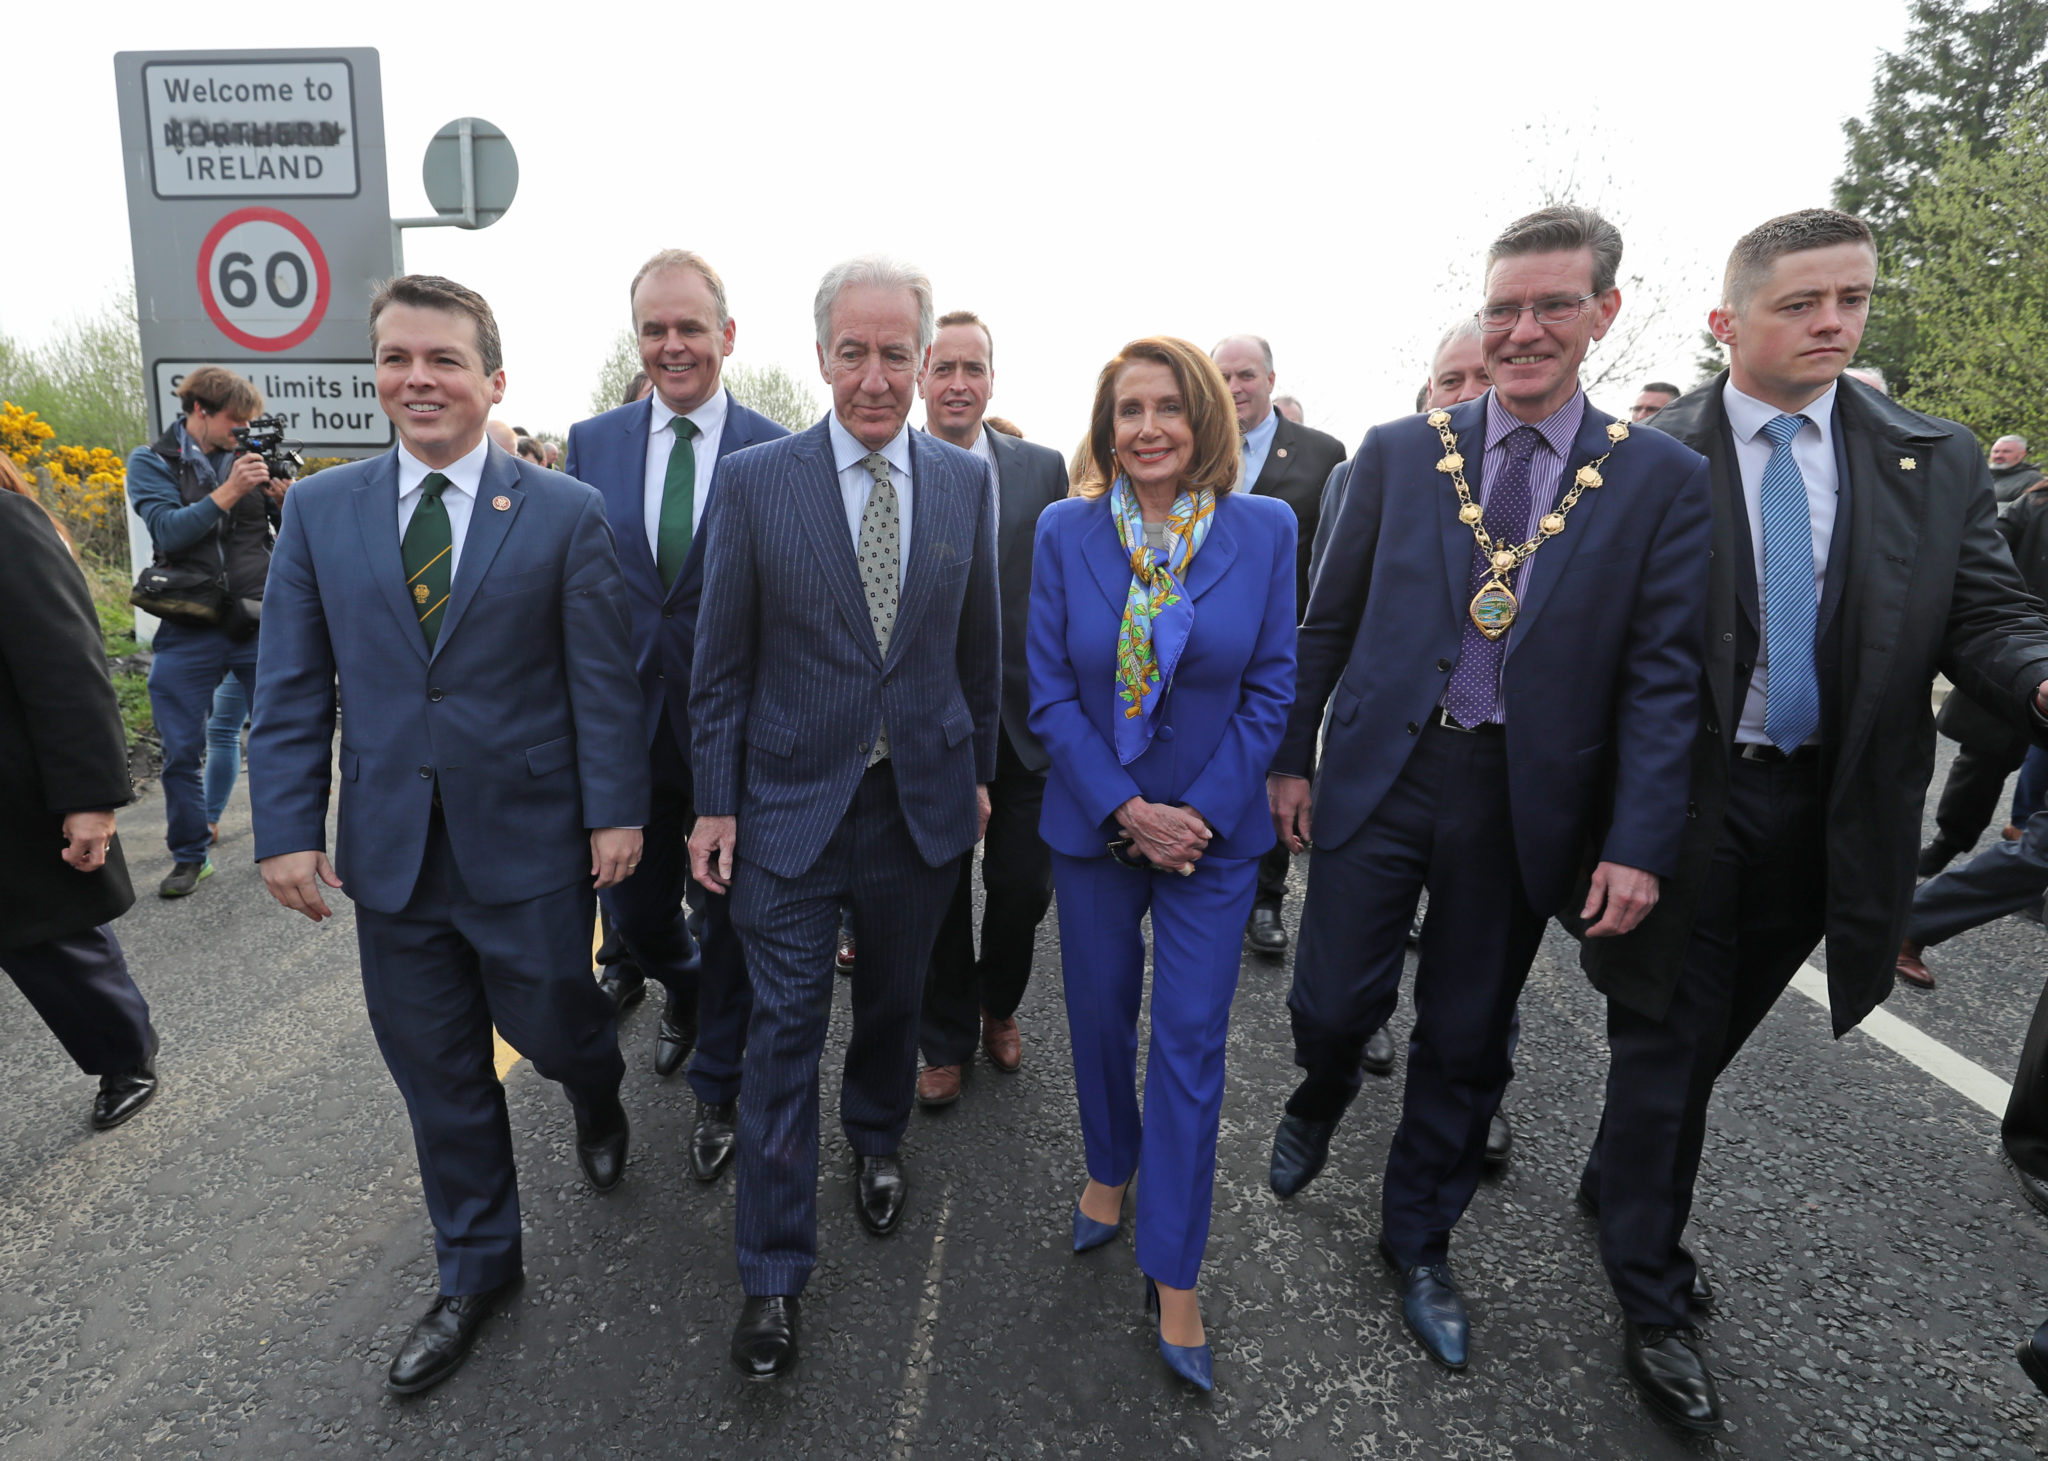 Congressman Brendan Boyle with Democratic leaders on a visit to Ireland, 18-04-2019. President Donald Trump